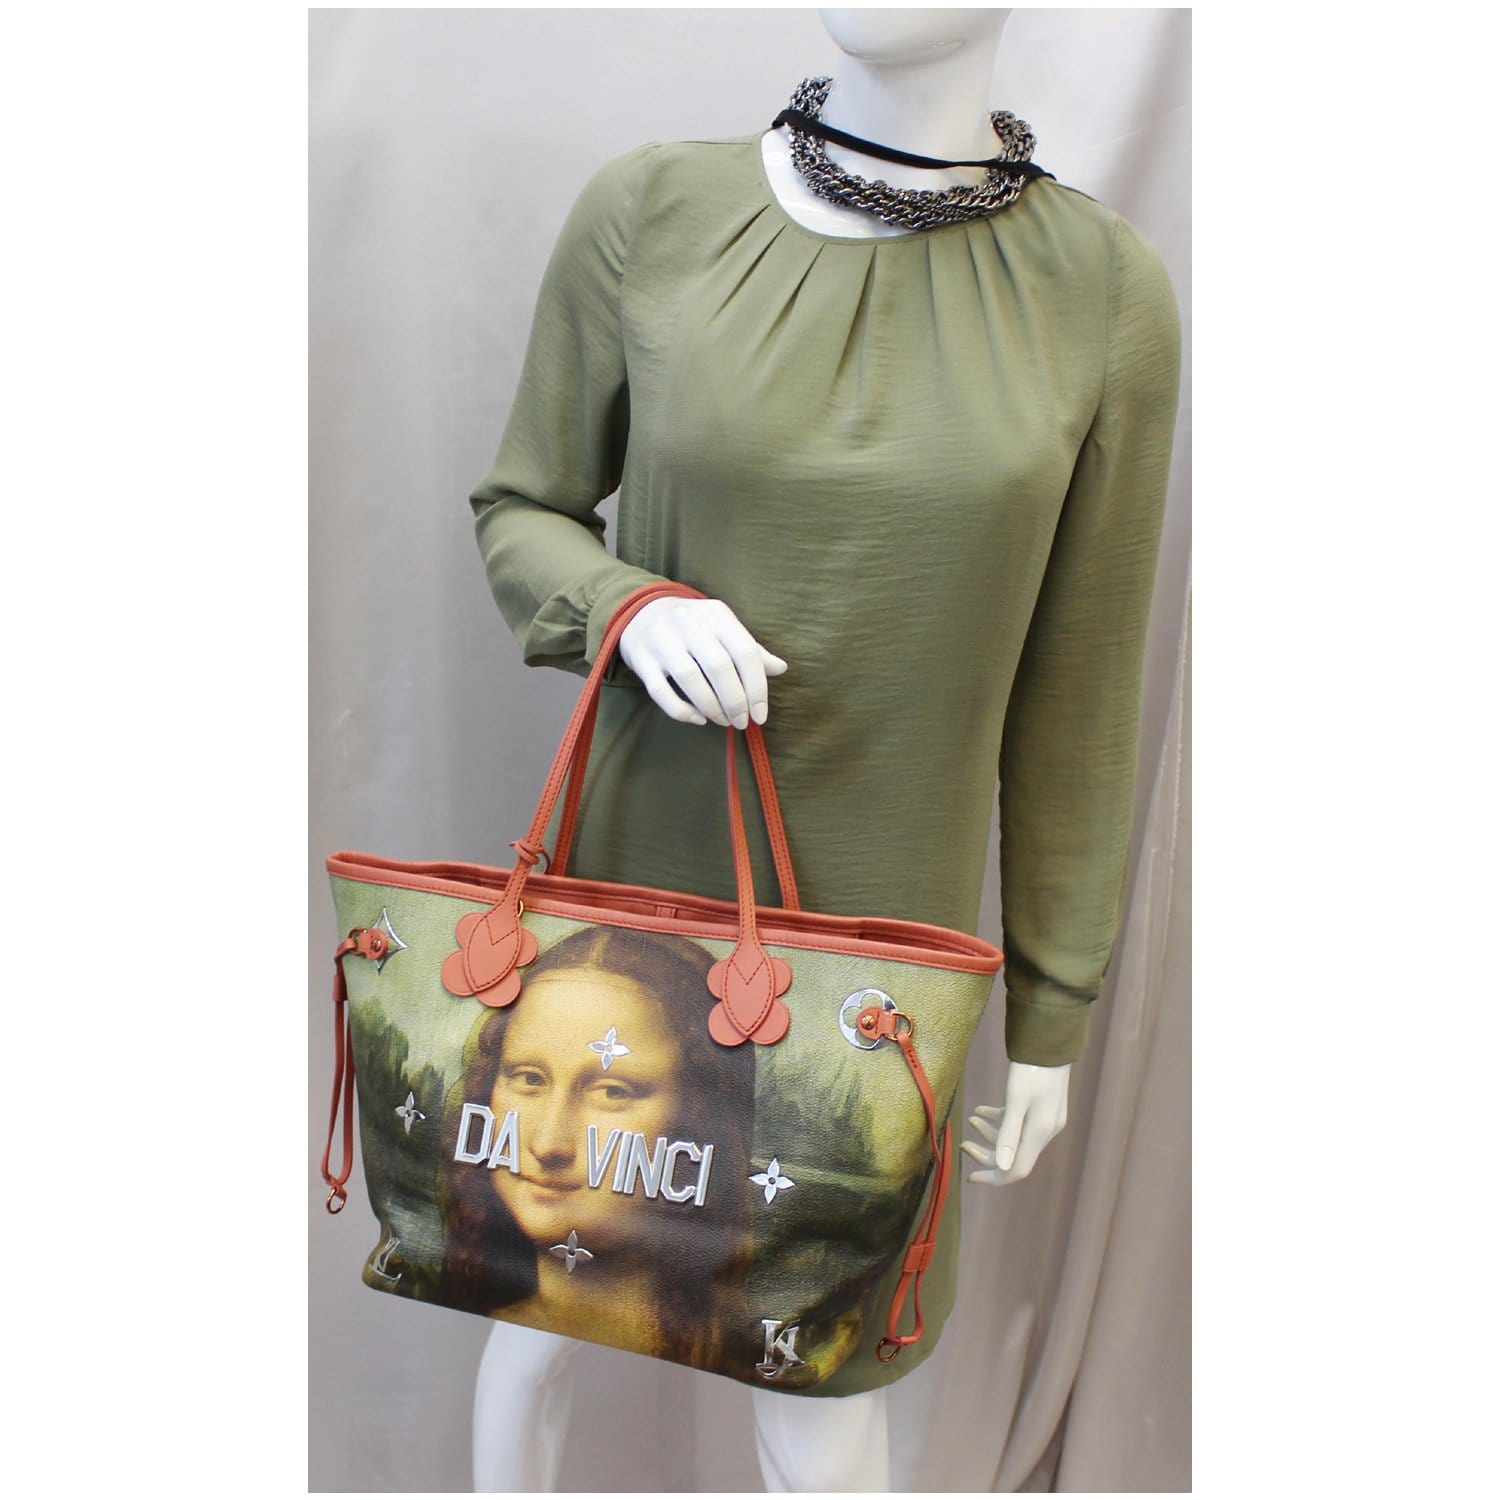 LOUIS VUITTON Da Vinci Masters Collection Neverfull MM Poppy Petal M43373  Women's Leather Tote Bag